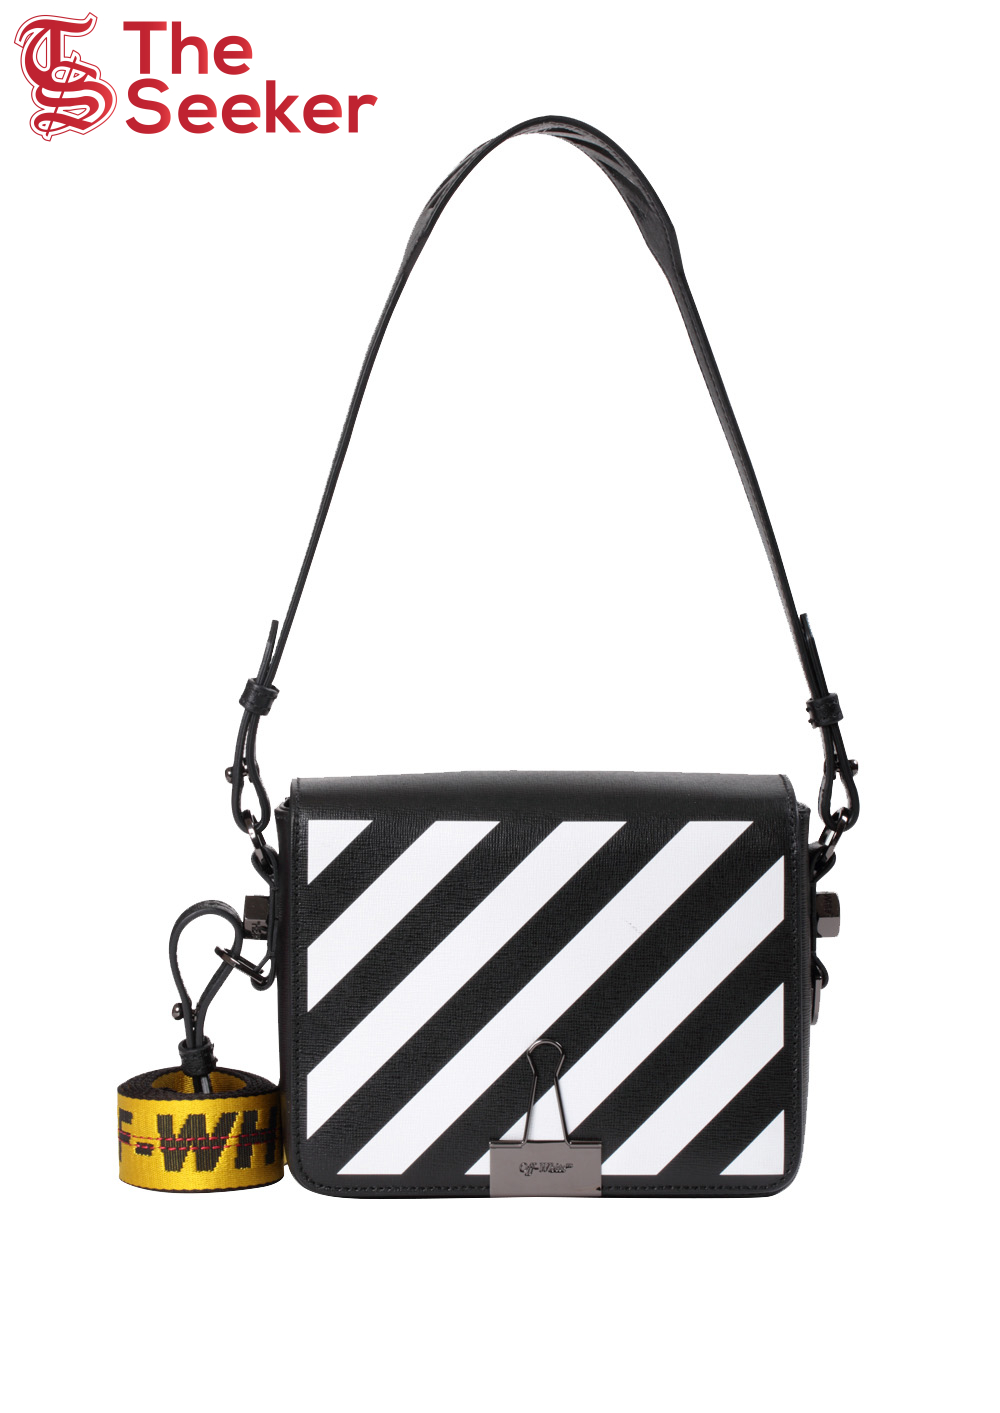 OFF-WHITE Binder Clip Bag Diag Black White Yellow